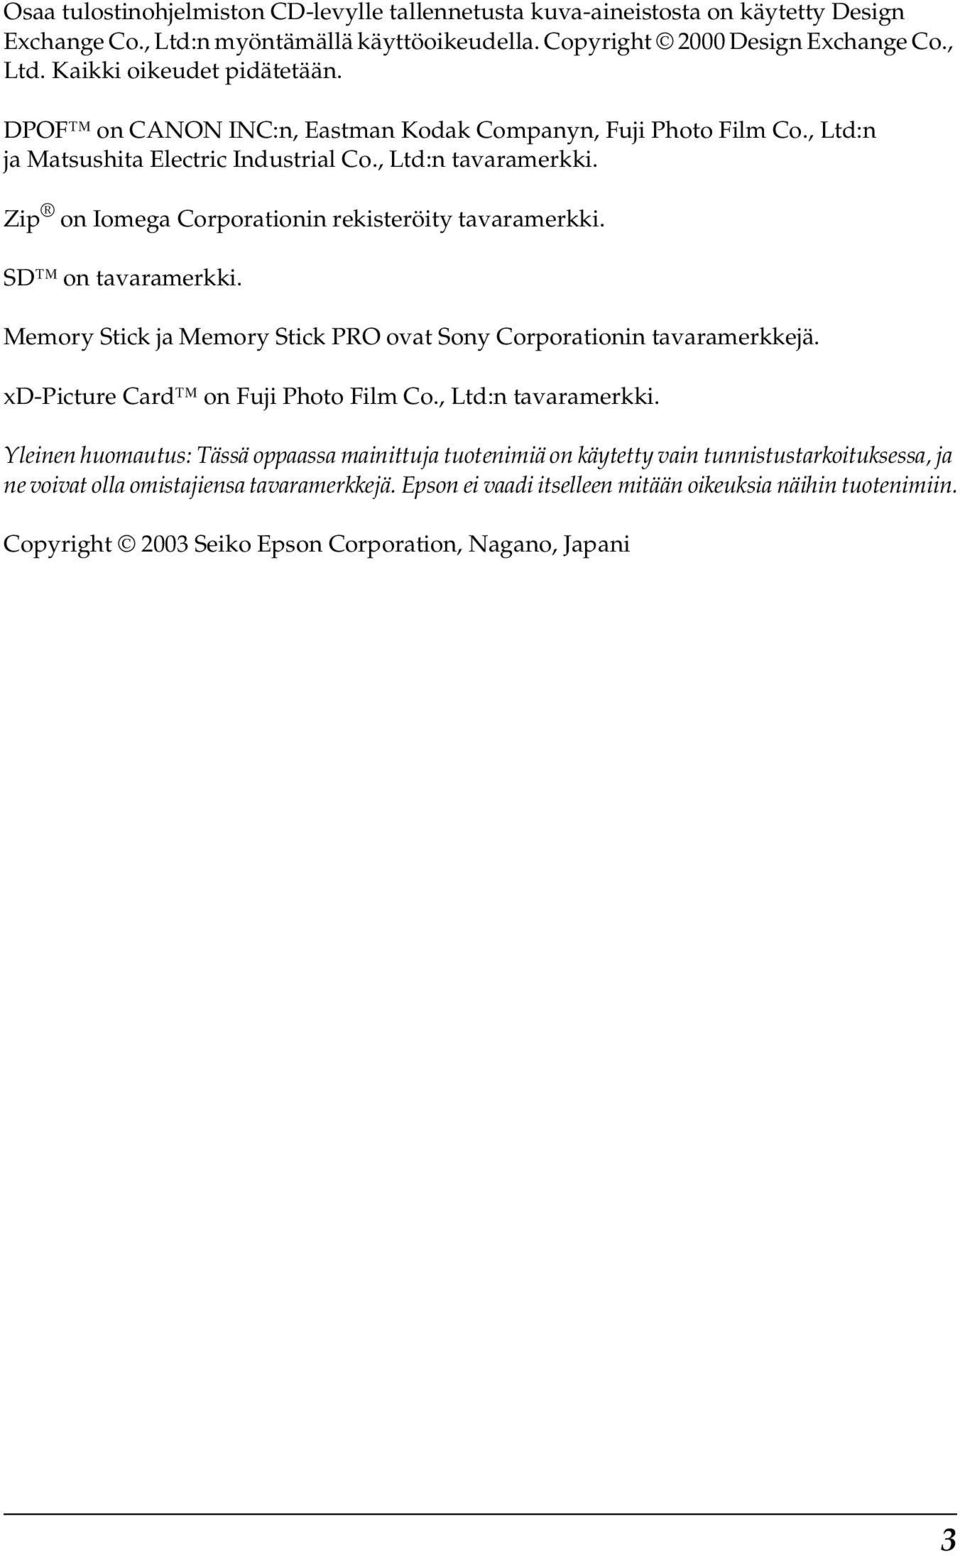 SD on tavaramerkki. Memory Stick ja Memory Stick PRO ovat Sony Corporationin tavaramerkkejä. xd-picture Card on Fuji Photo Film Co., Ltd:n tavaramerkki.